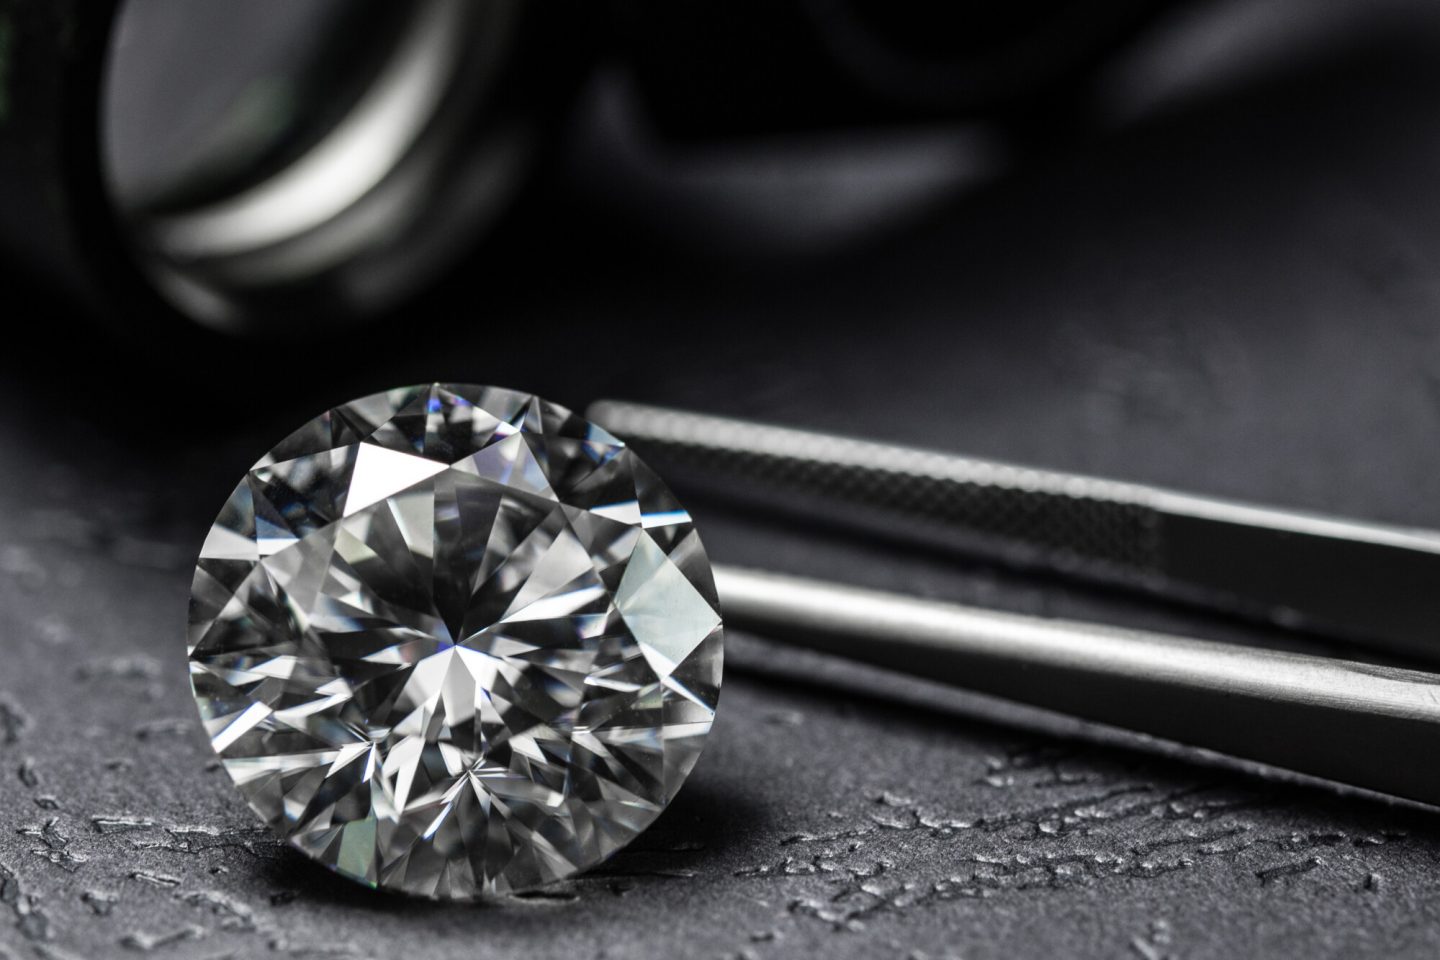 Lab-Grown Diamonds vs. Natural Diamonds: The Basic Differences